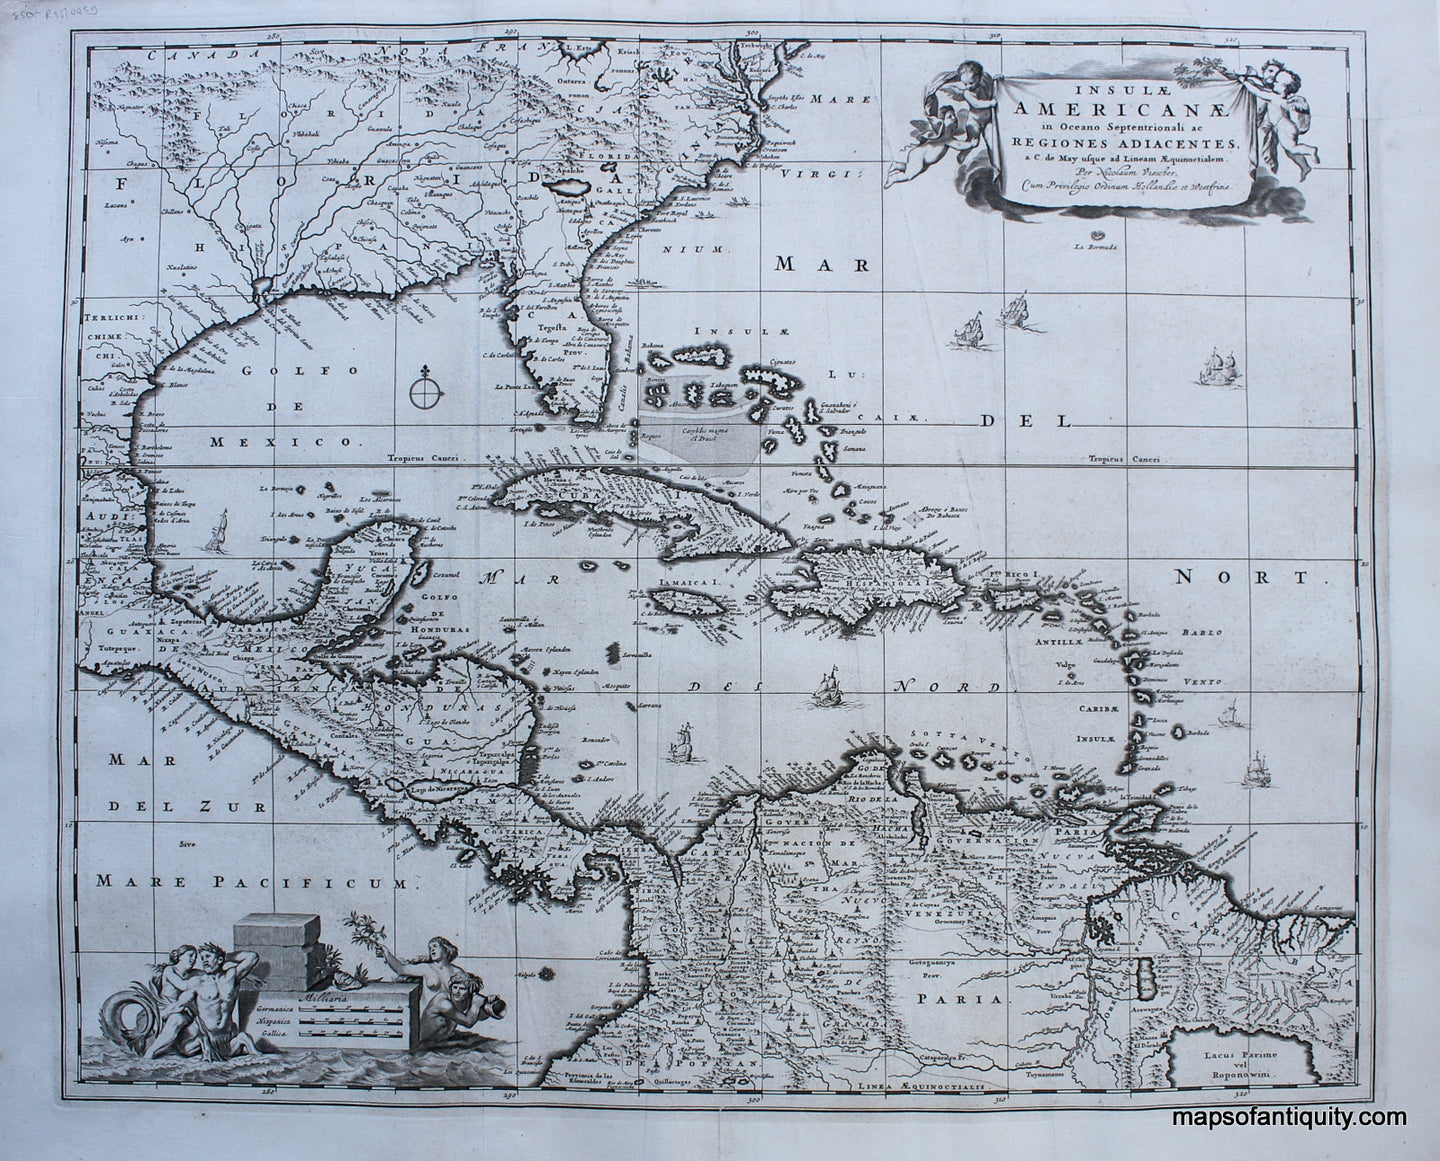 Black-and-White-Engraved-Antique-Map-Insulae-Americanae-in-Oceano-Septentrionali-ac-Regiones-Adiacentes-**********-Latin-America-Central-America-1690-Visscher-Maps-Of-Antiquity